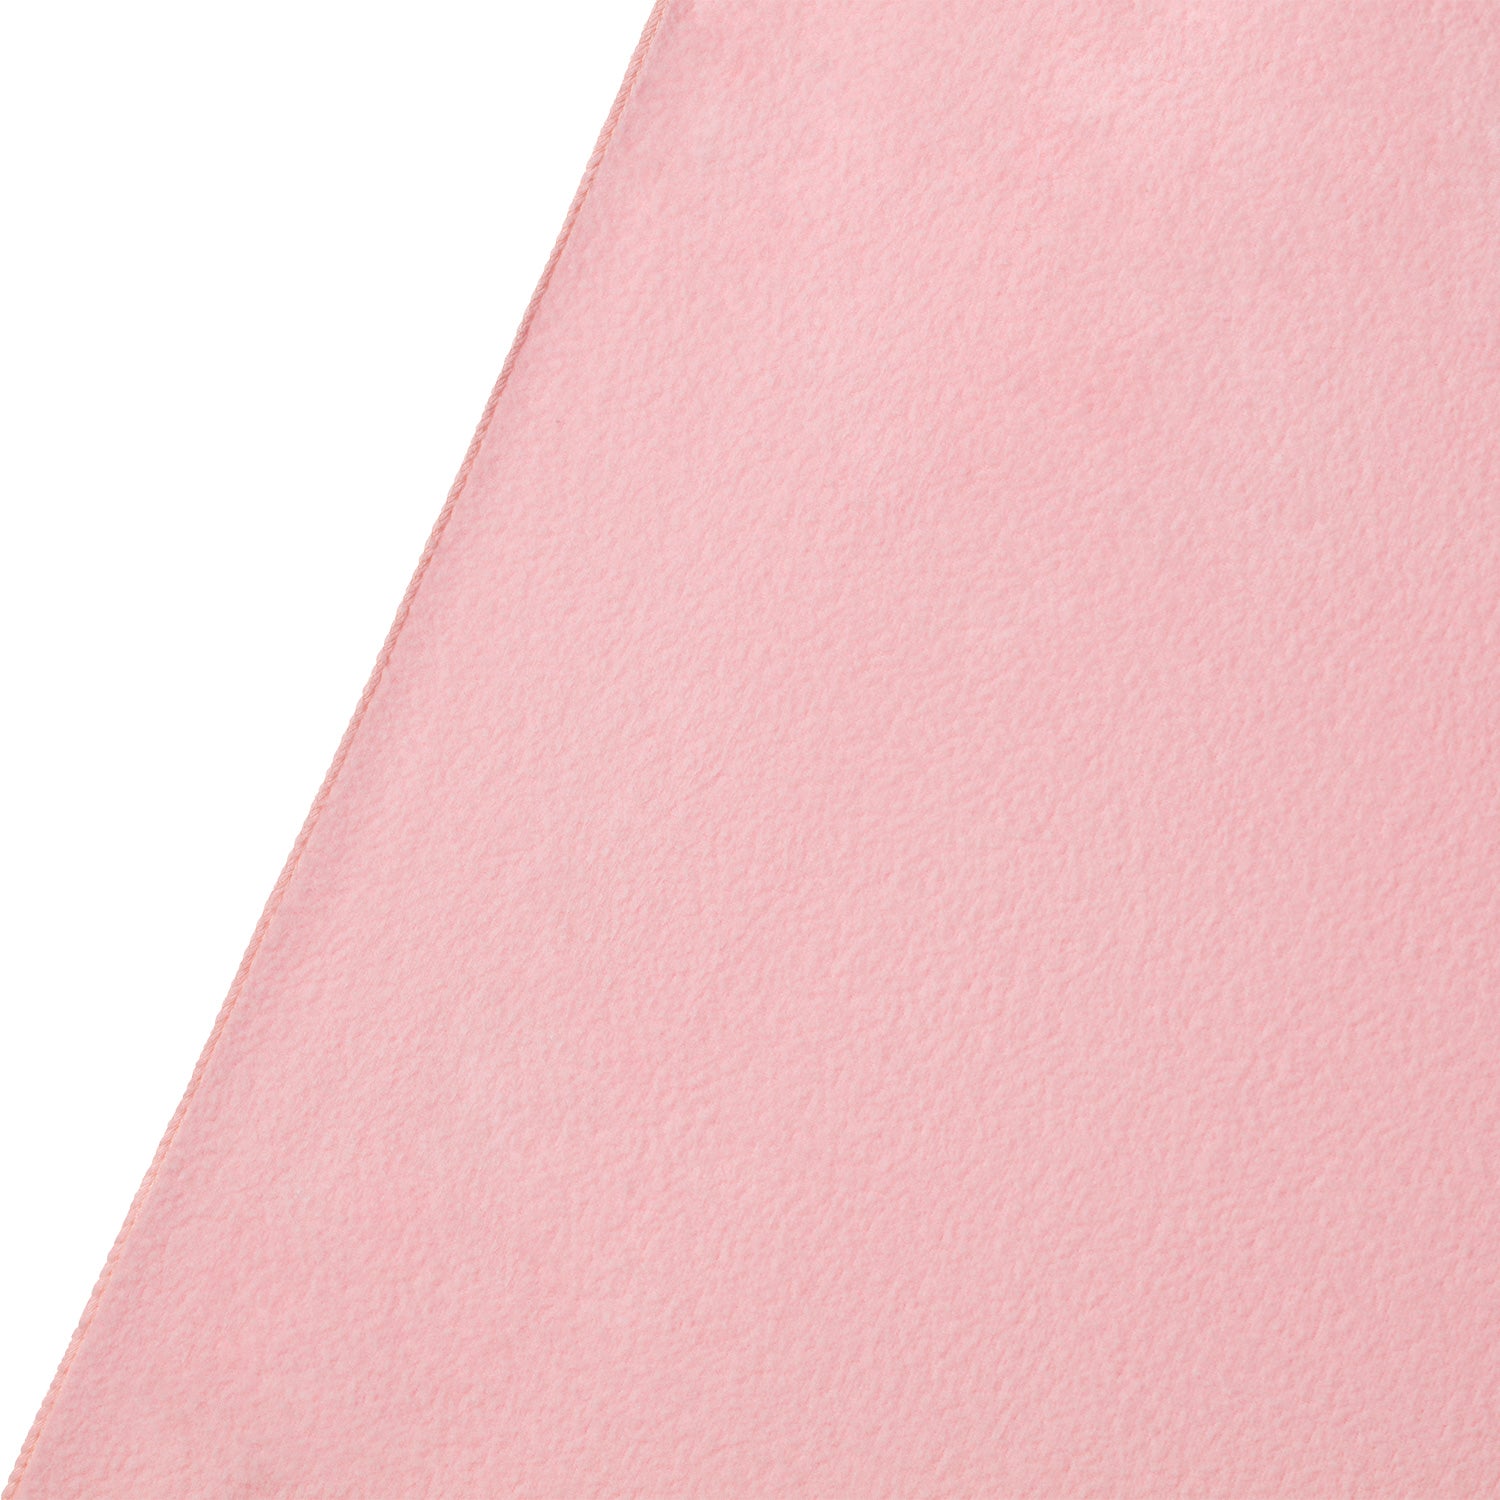 X-Drop Pro Wrinkle-Resistant Backdrop - Blush Pink (8' x 8')